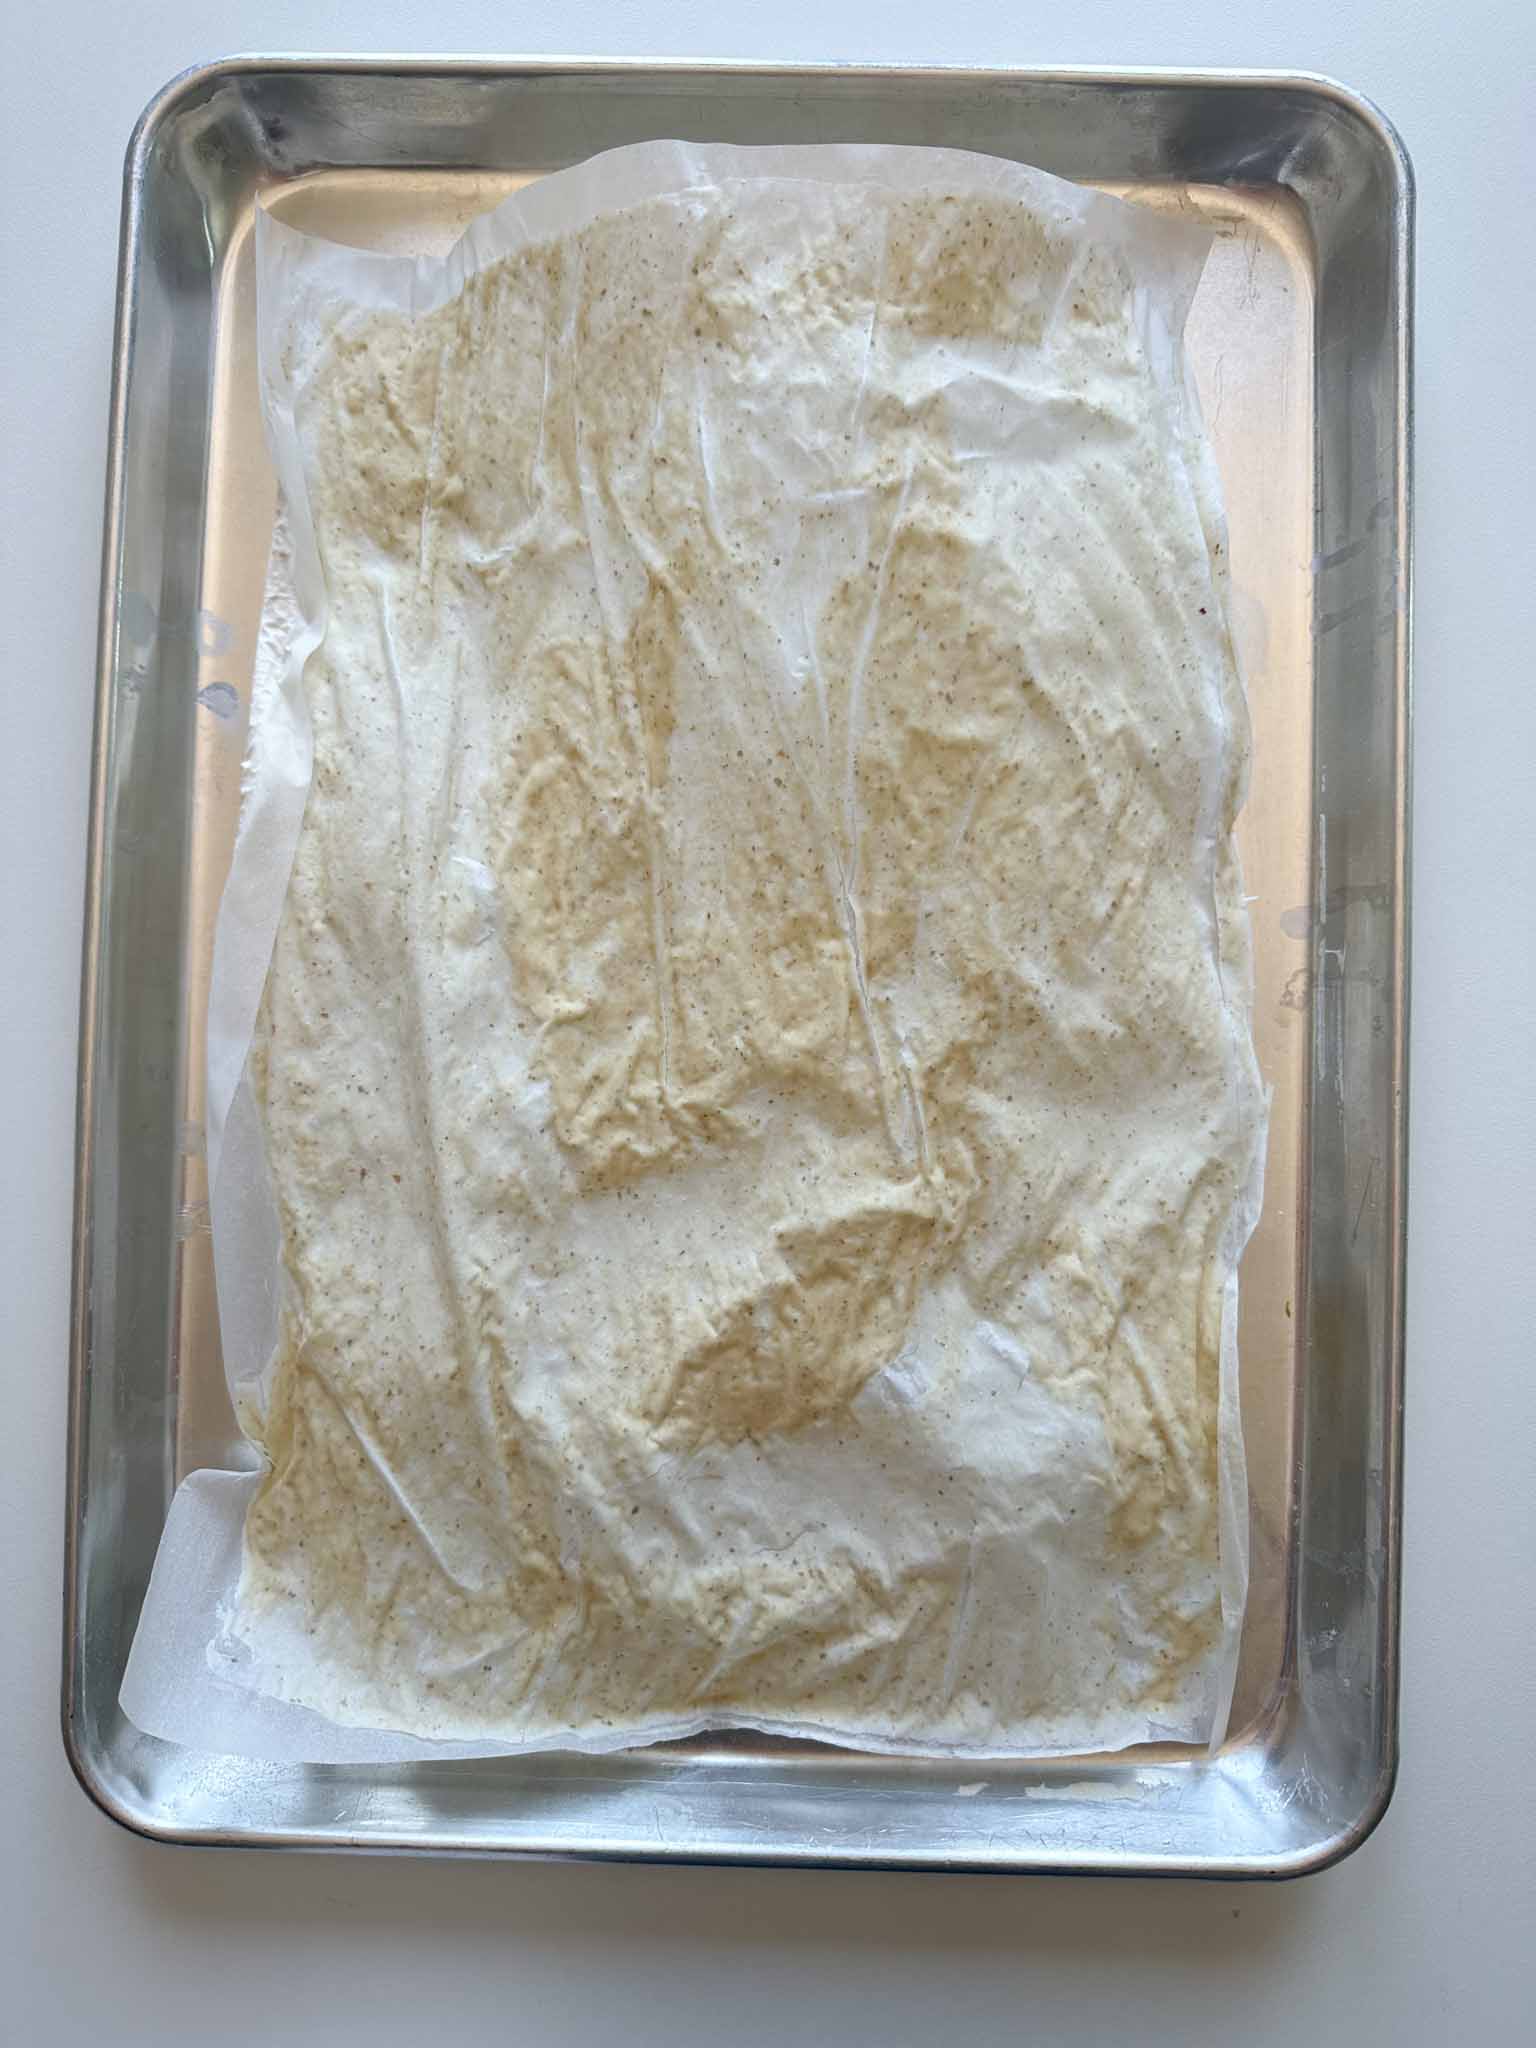 dried sourdoughs starter on pan